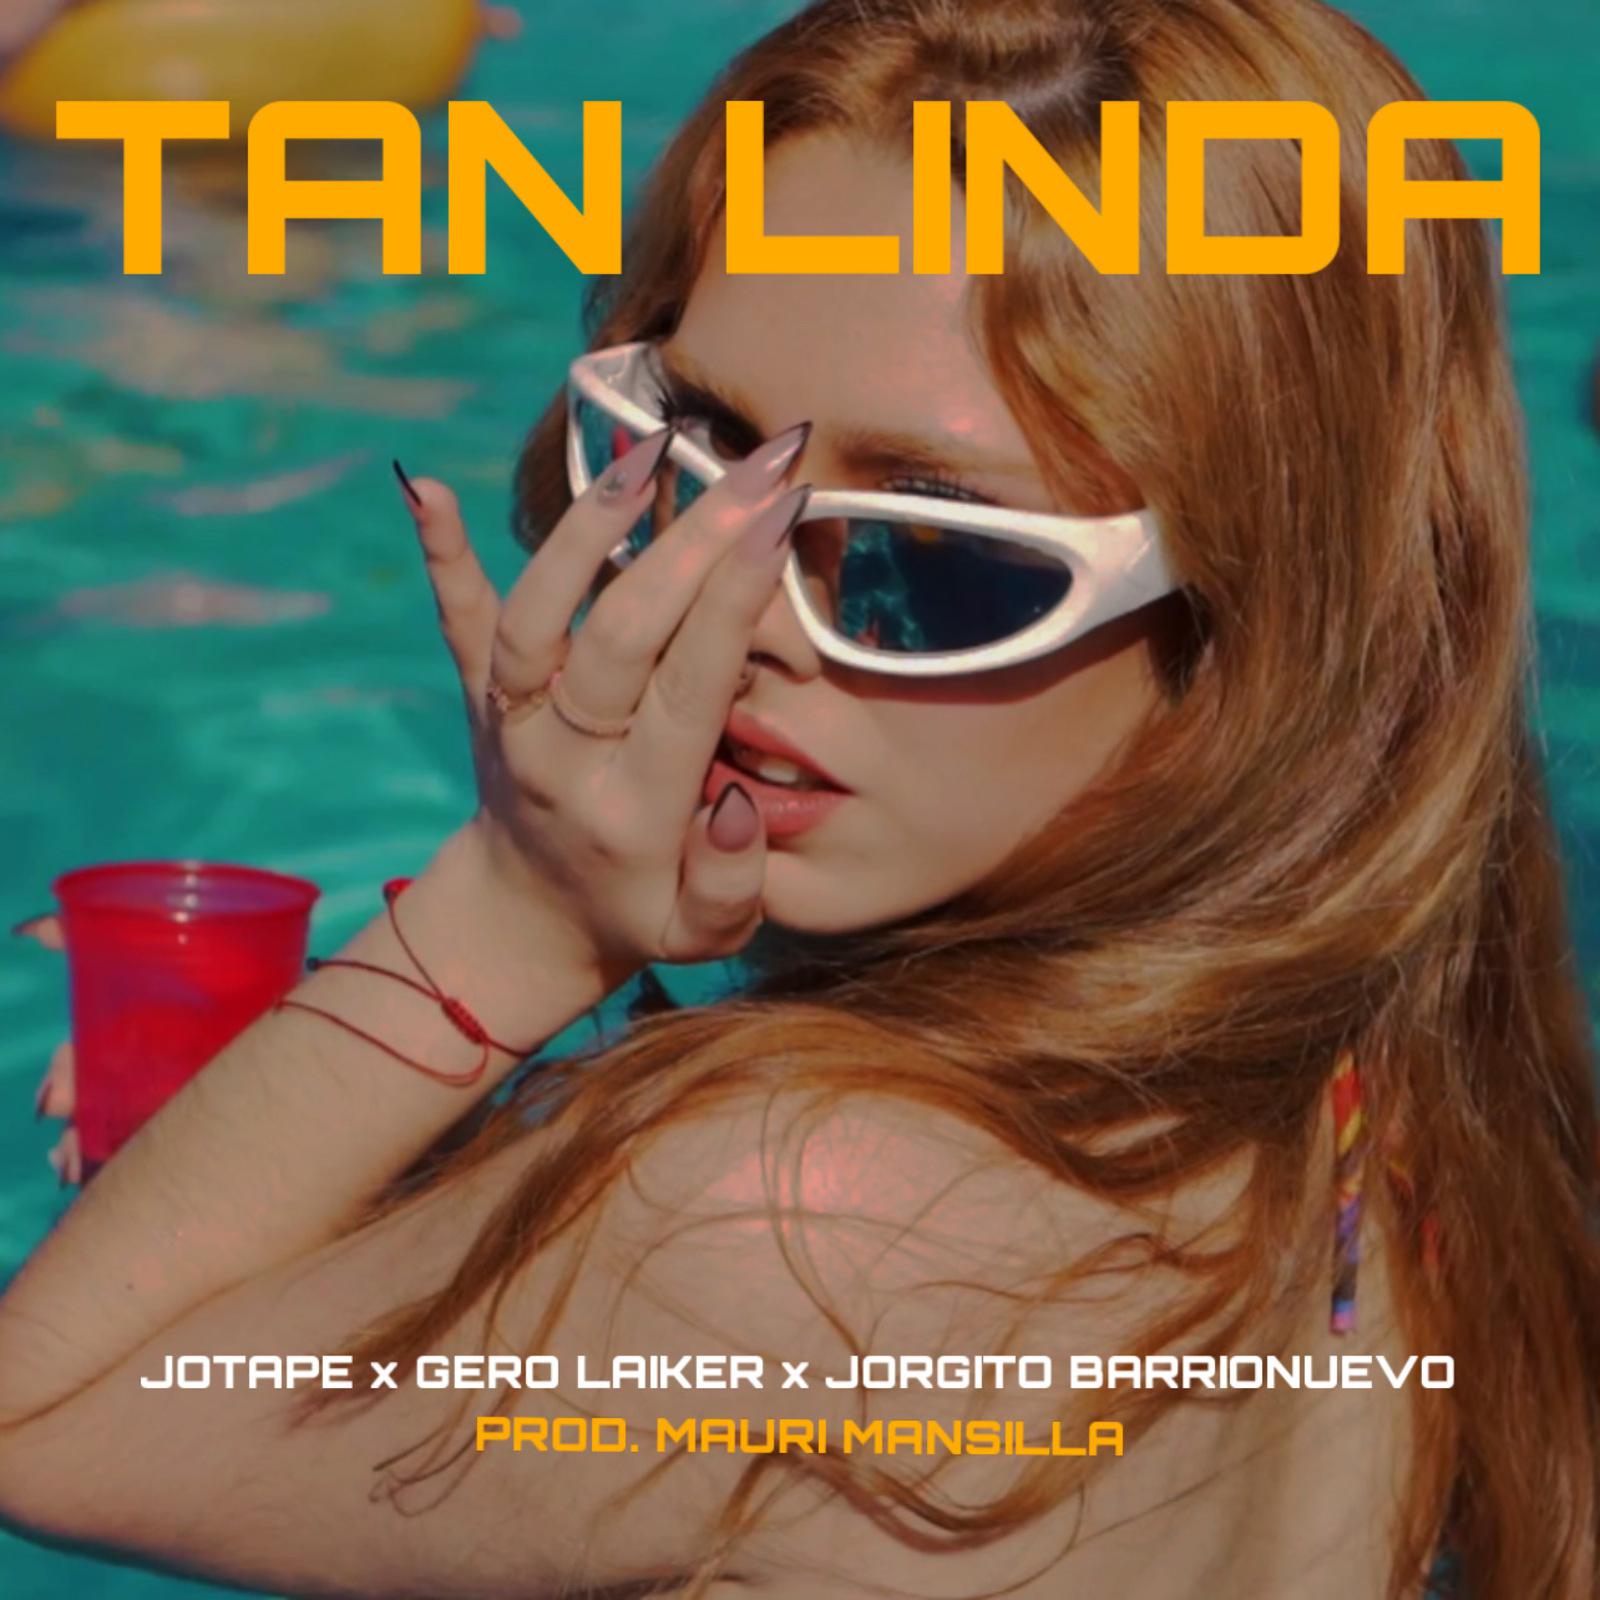 Jotape - Tan Linda (feat. Jorgito Barrionuevo)